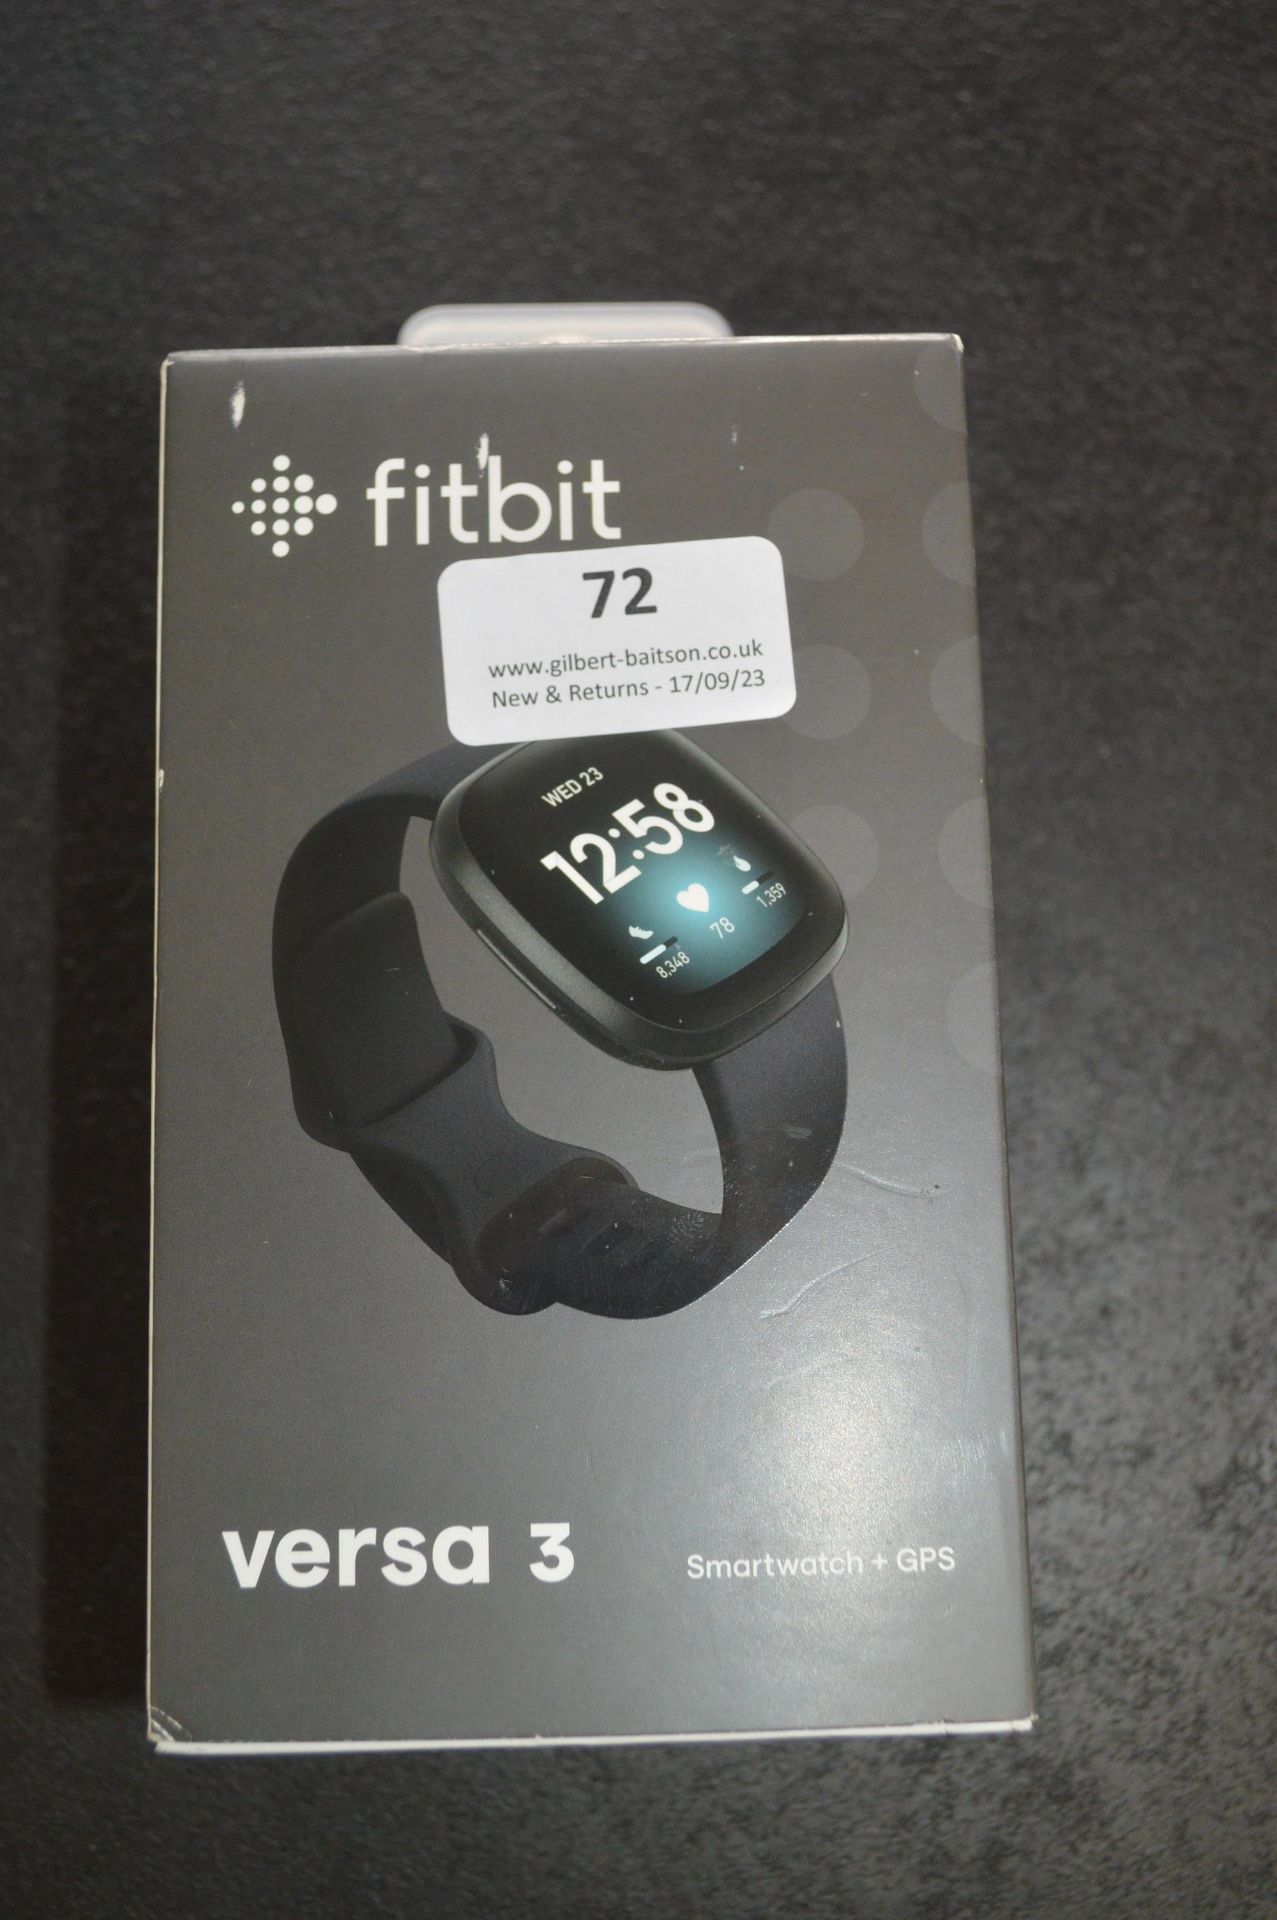 *Fitbit Versa 3 Smart Watch with GPS